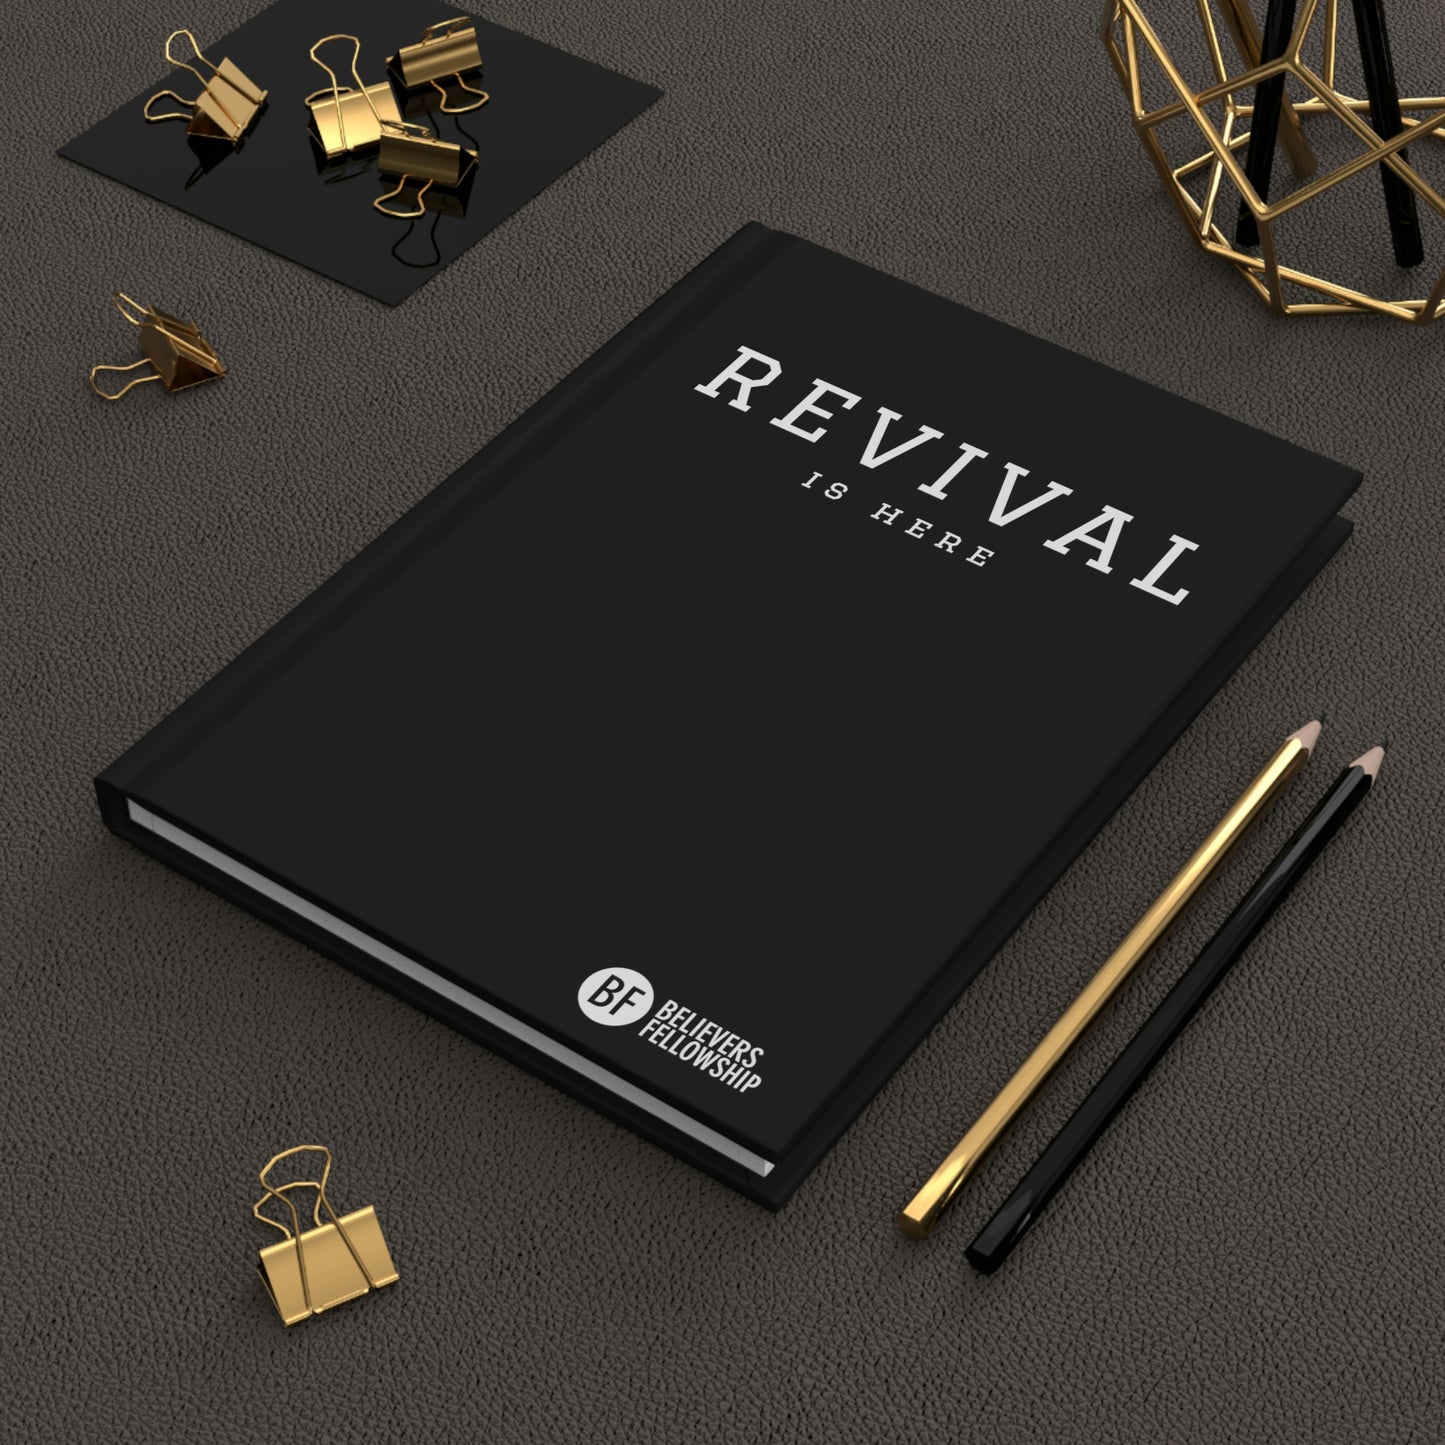 "Revival Is Here" Hardcover Prayer & Sermon Notes Journal